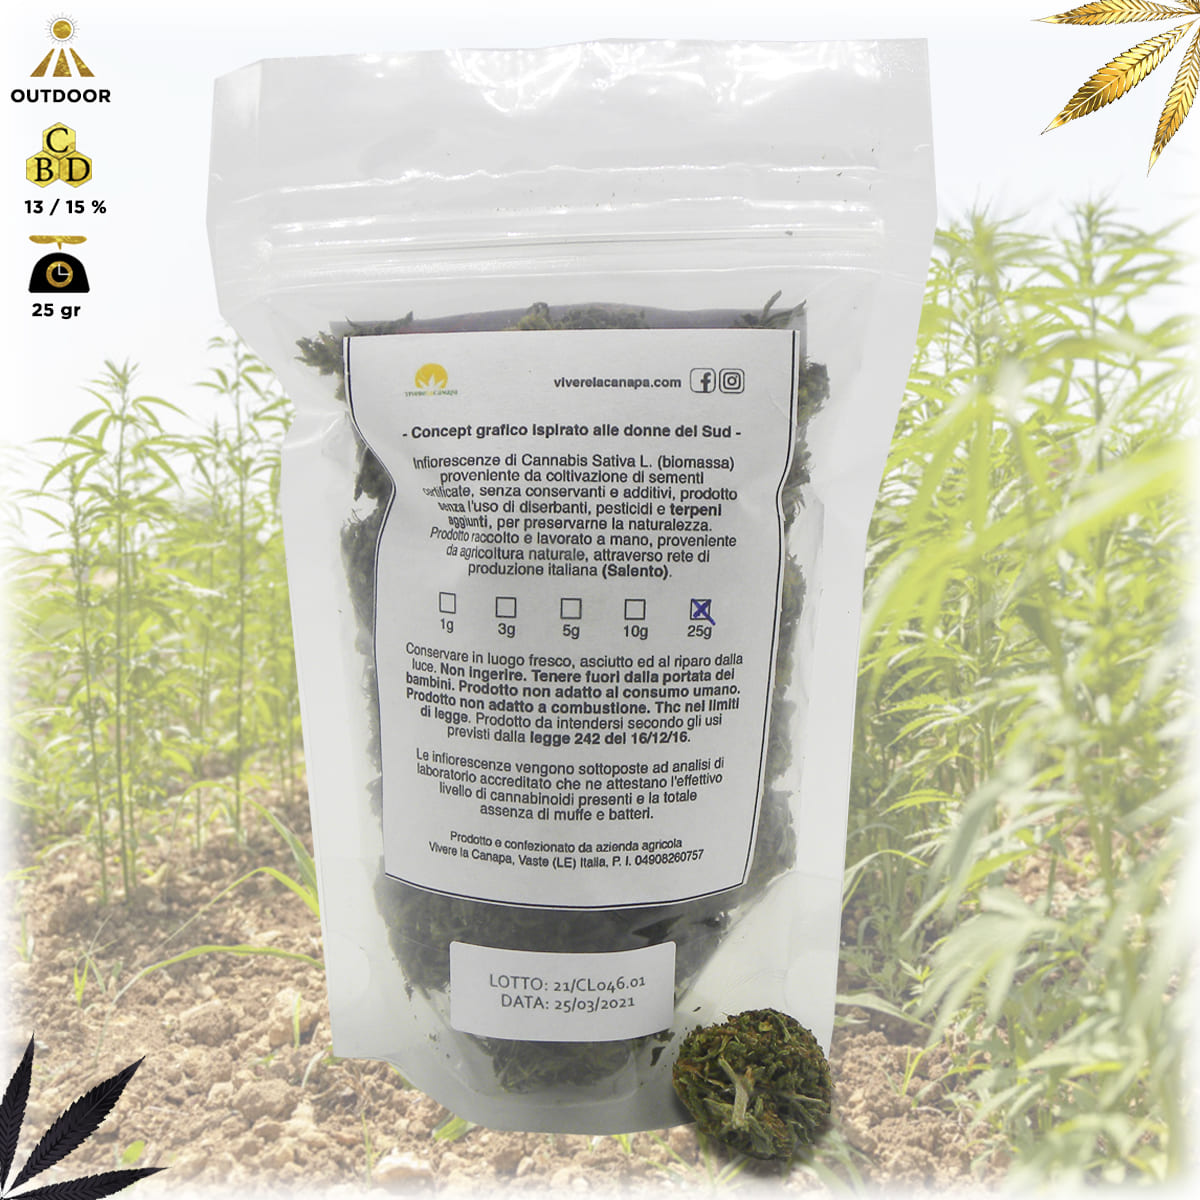 bud fiore infiorescenza cannabis light qualità mary sorbet bustina da 25 grammi